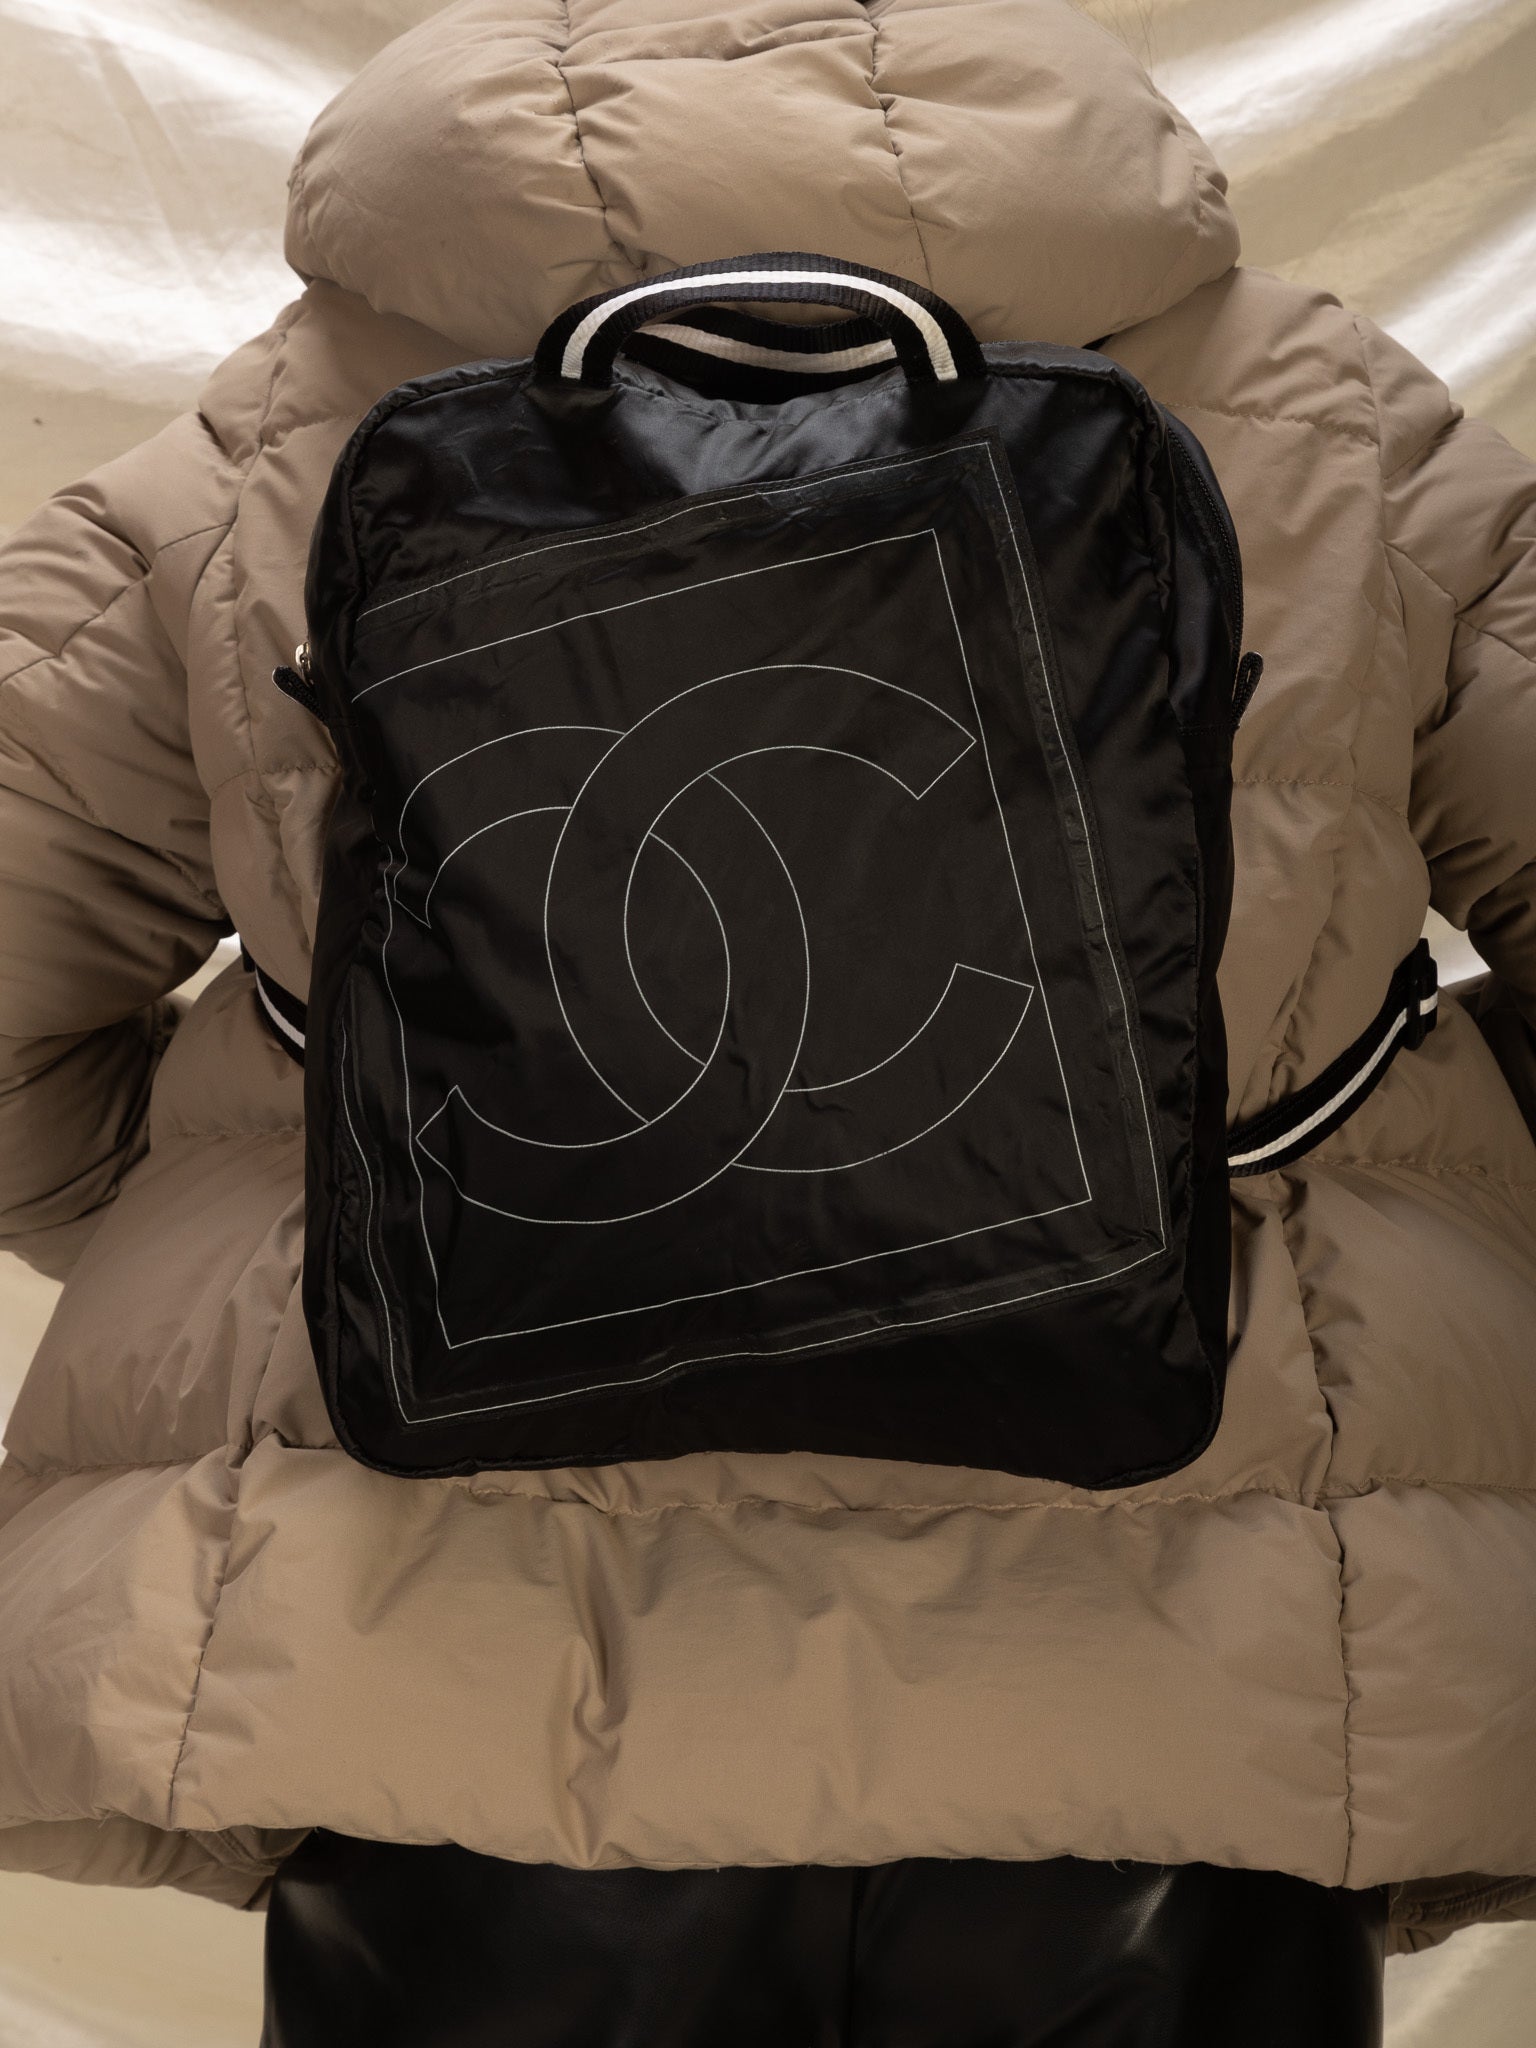 Rare Chanel Nylon Backpack